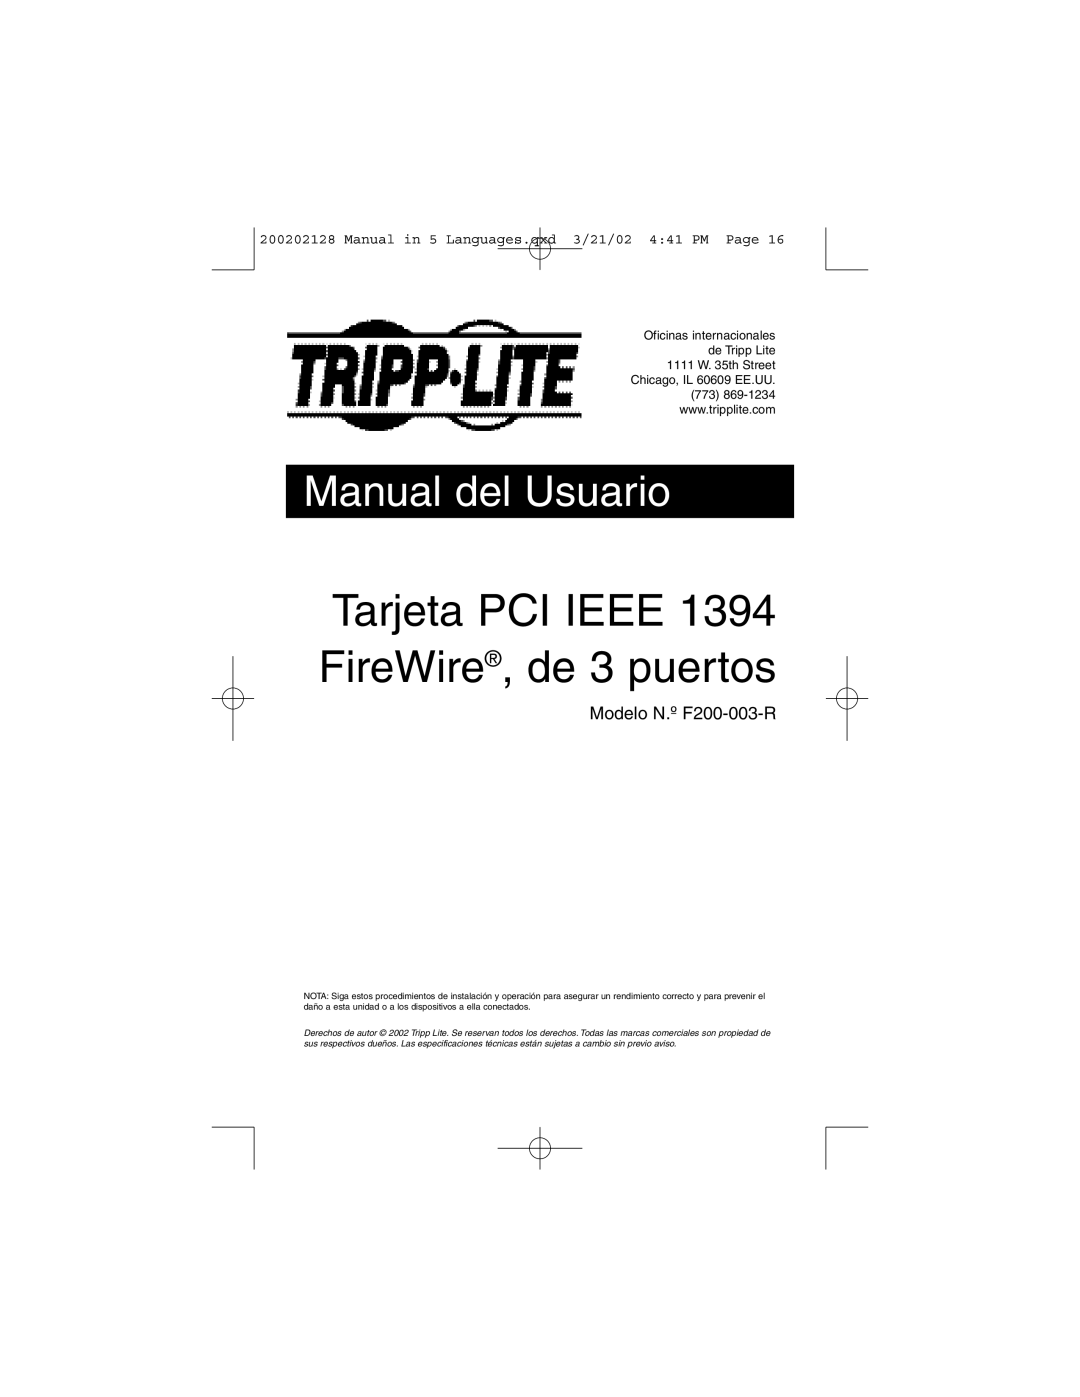 Tripp Lite F200-003-R user manual Tarjeta PCI IEEE 1394 FireWire, de 3 puertos, Manual del Usuario 